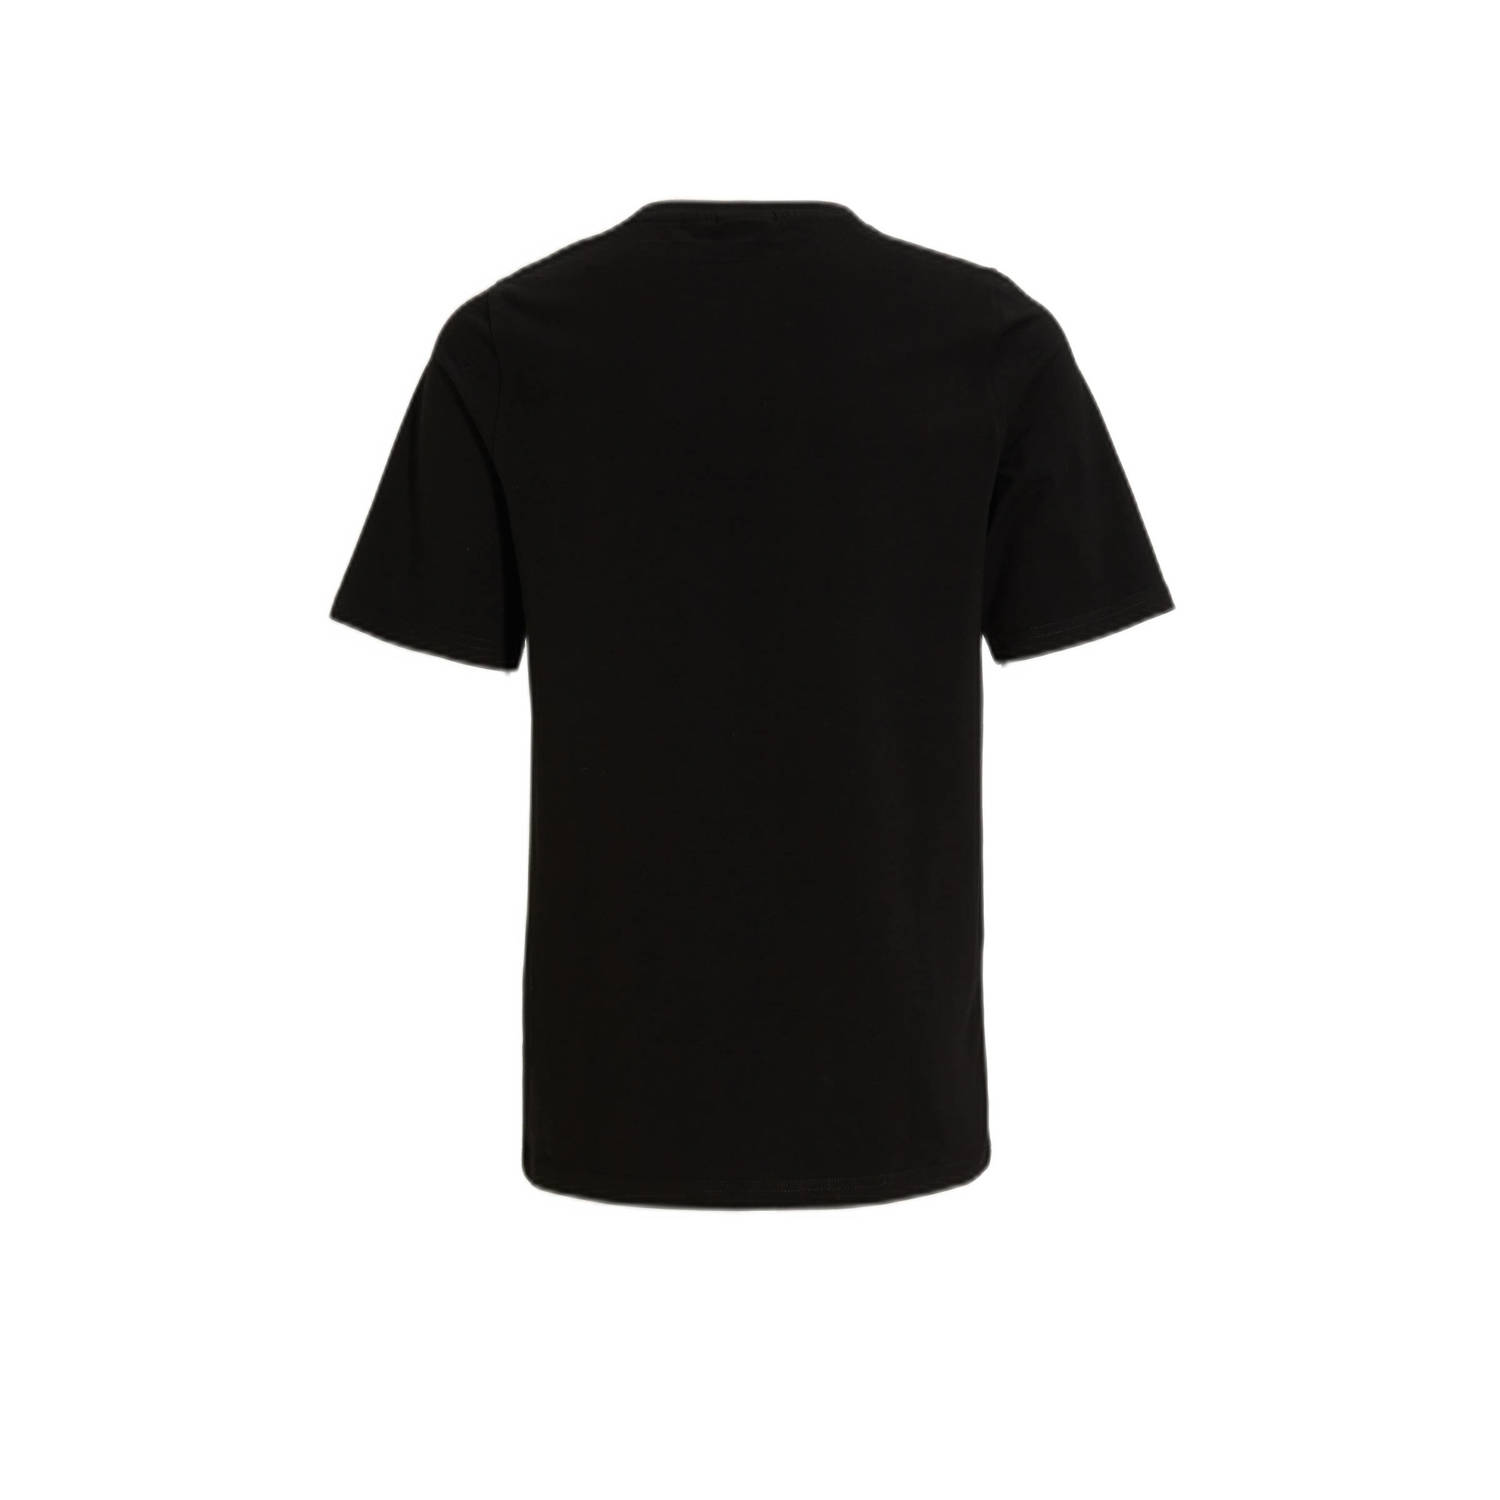 BLACK BANANAS T-shirt zwart